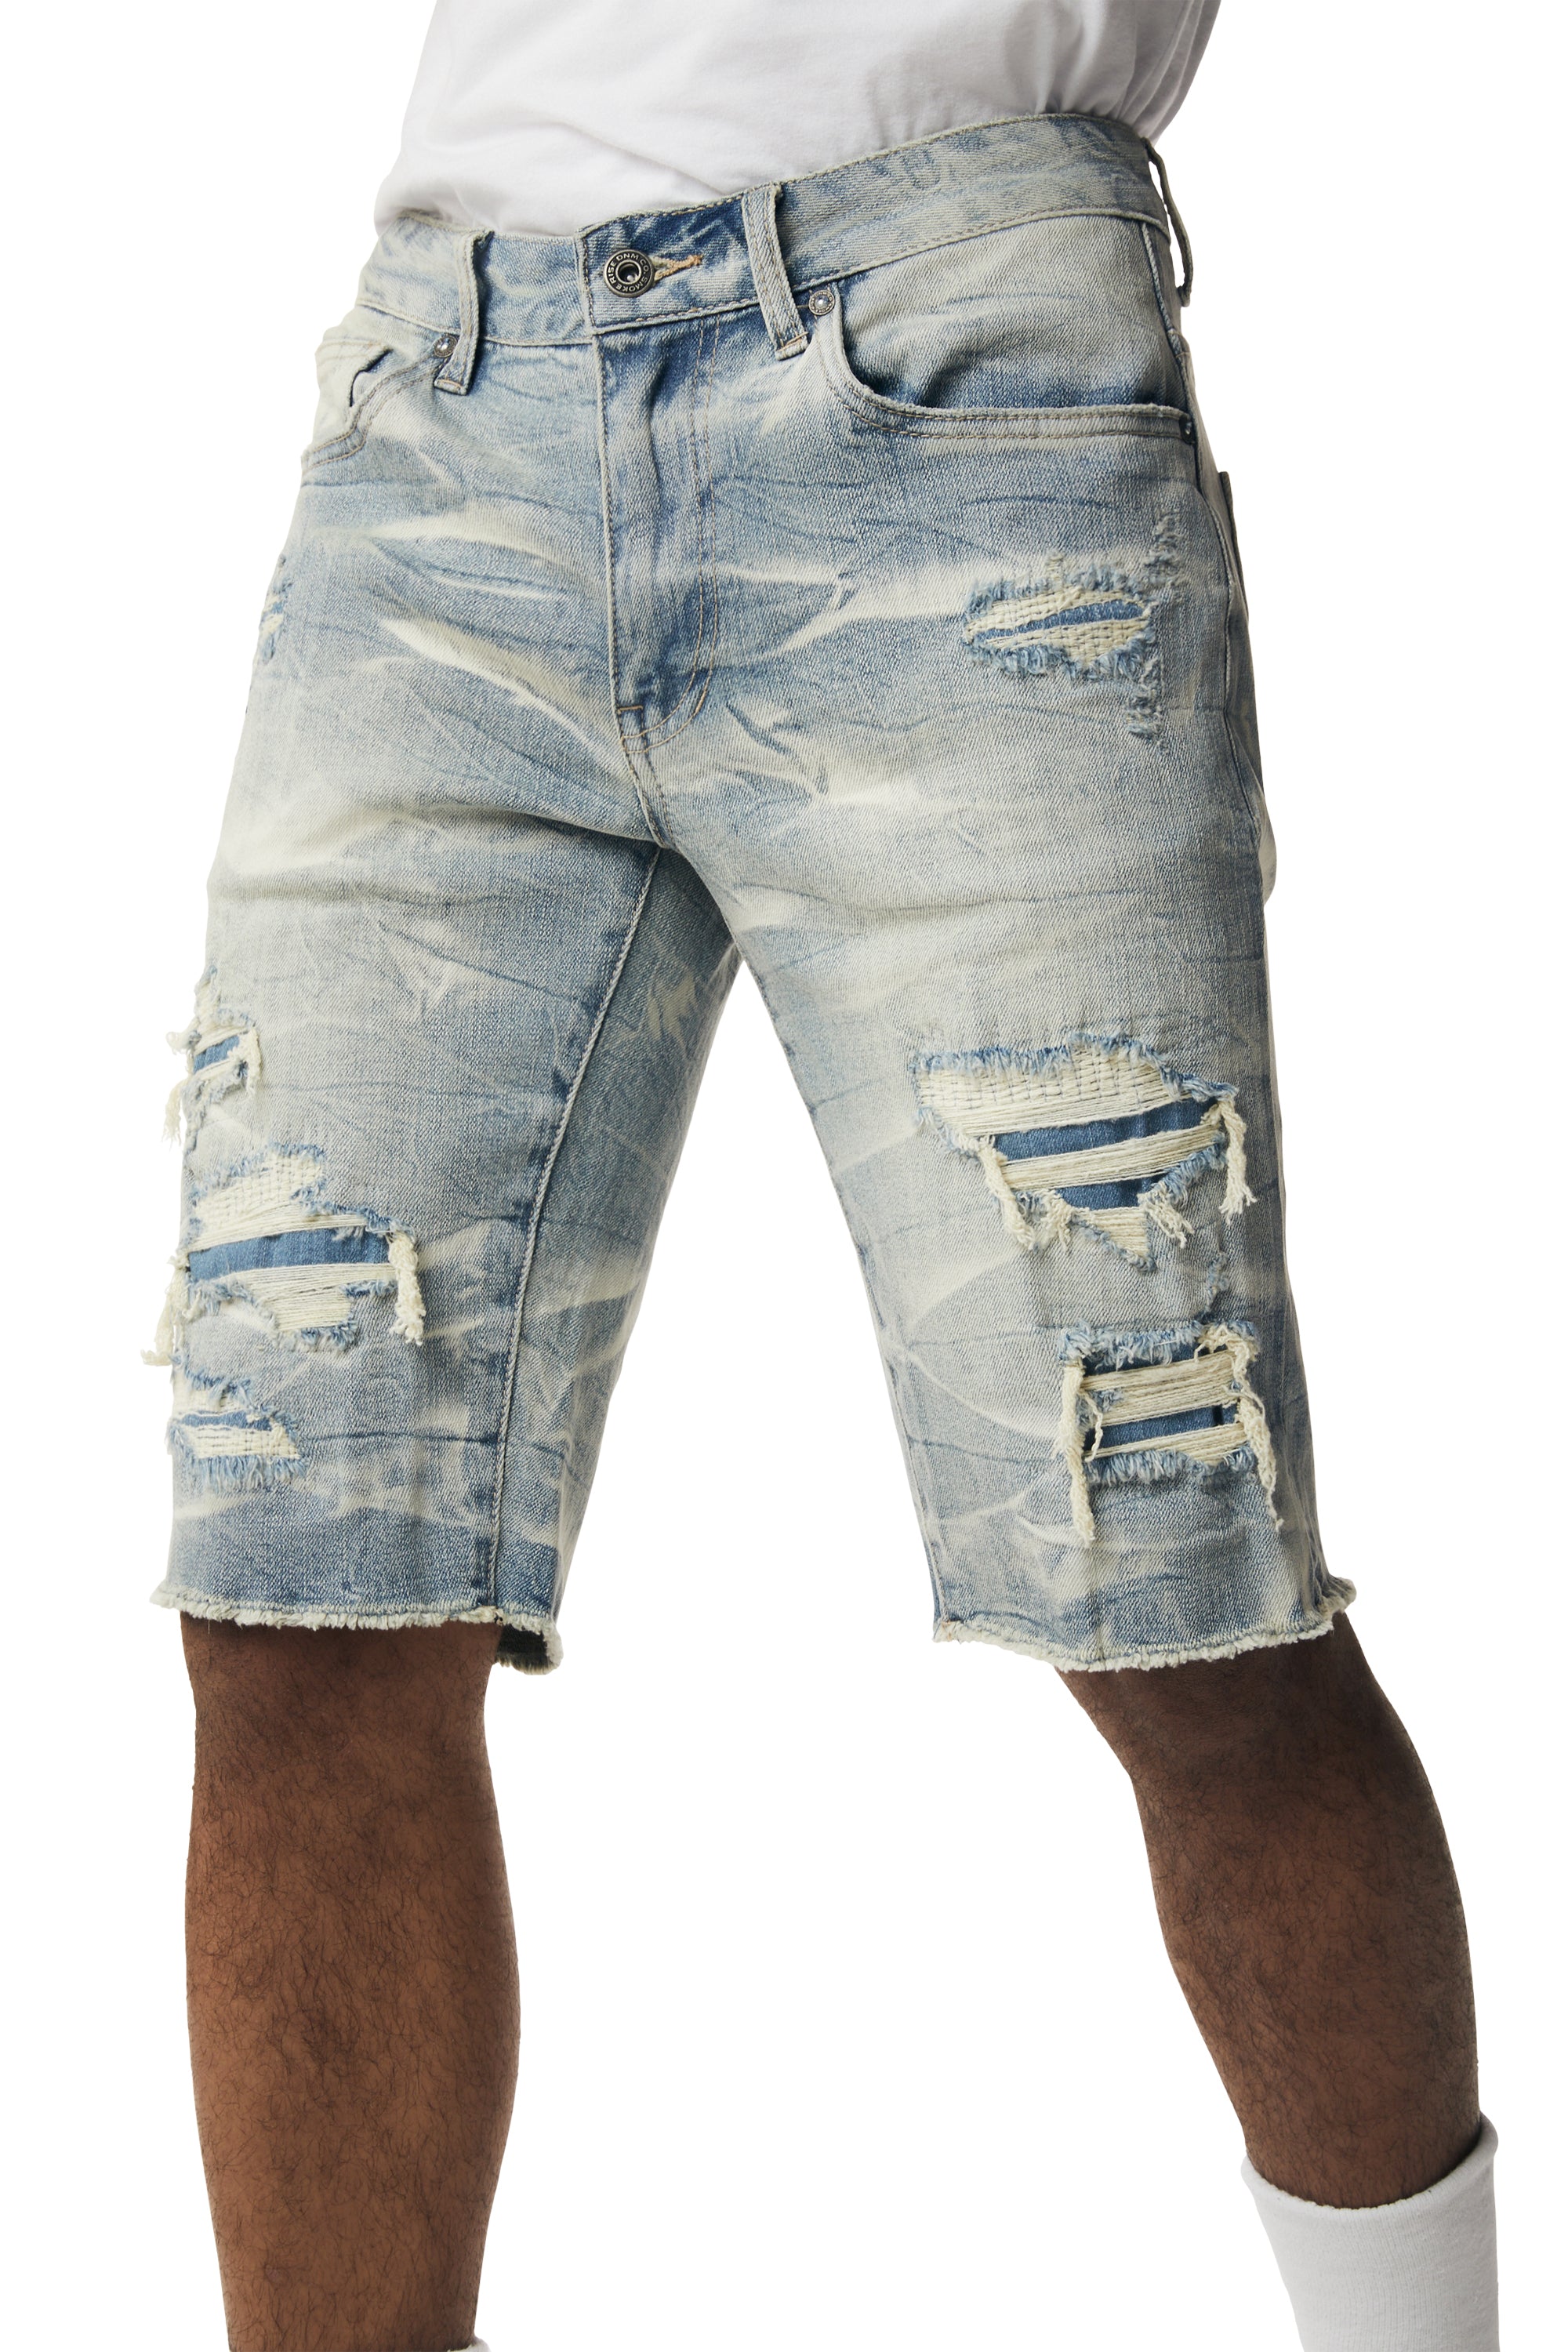 Essential Denim Shorts - Clyde Blue